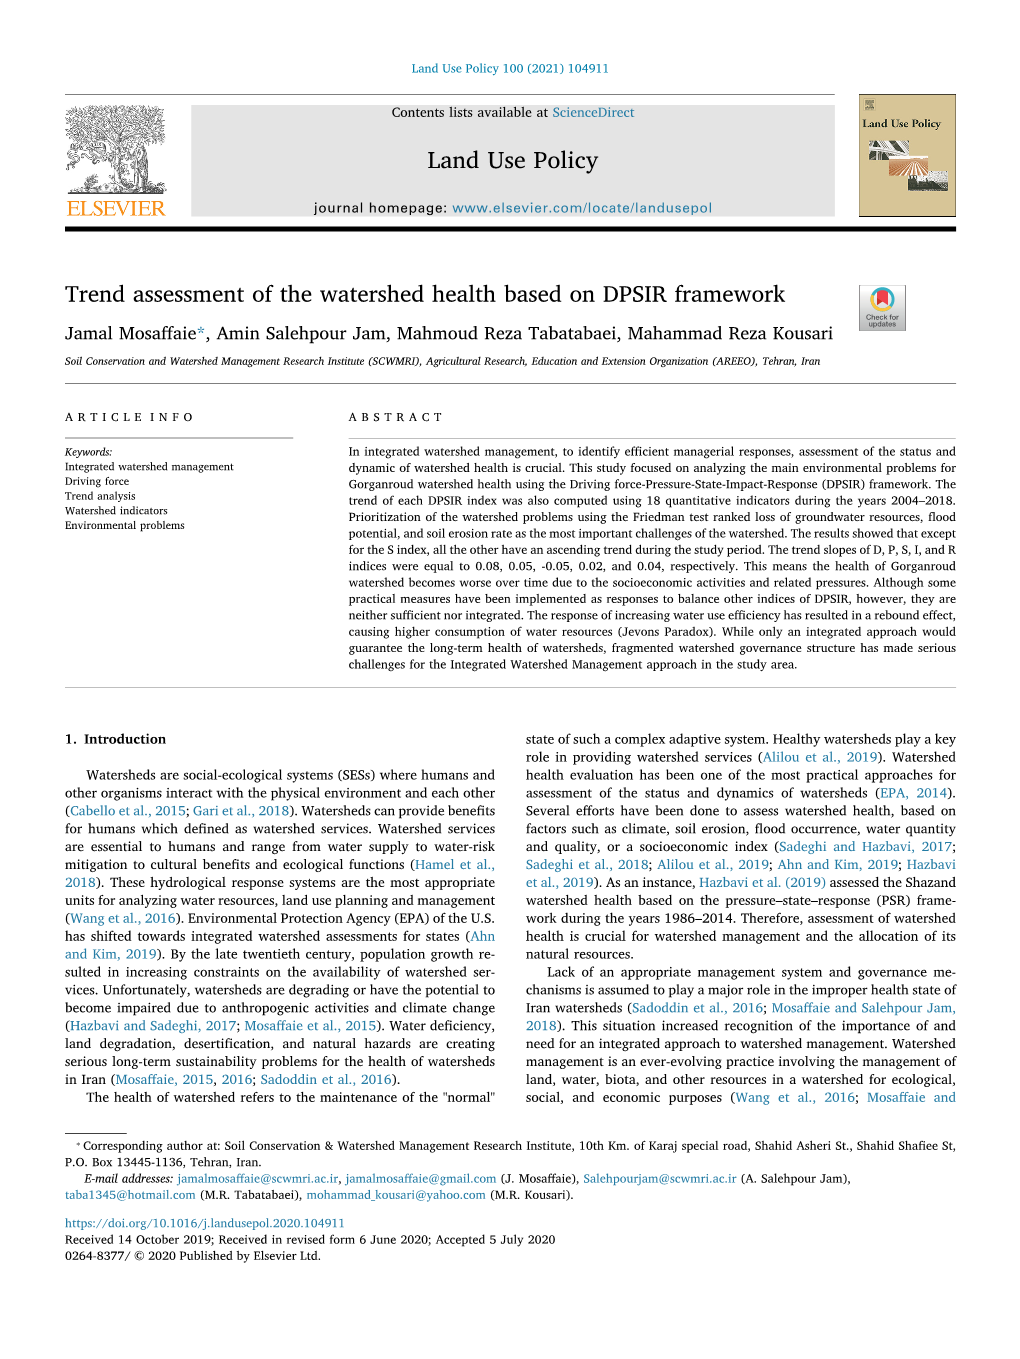 Trend Assessment of the Watershed Health Based on DPSIR Framework T Jamal Mosaﬀaie*, Amin Salehpour Jam, Mahmoud Reza Tabatabaei, Mahammad Reza Kousari